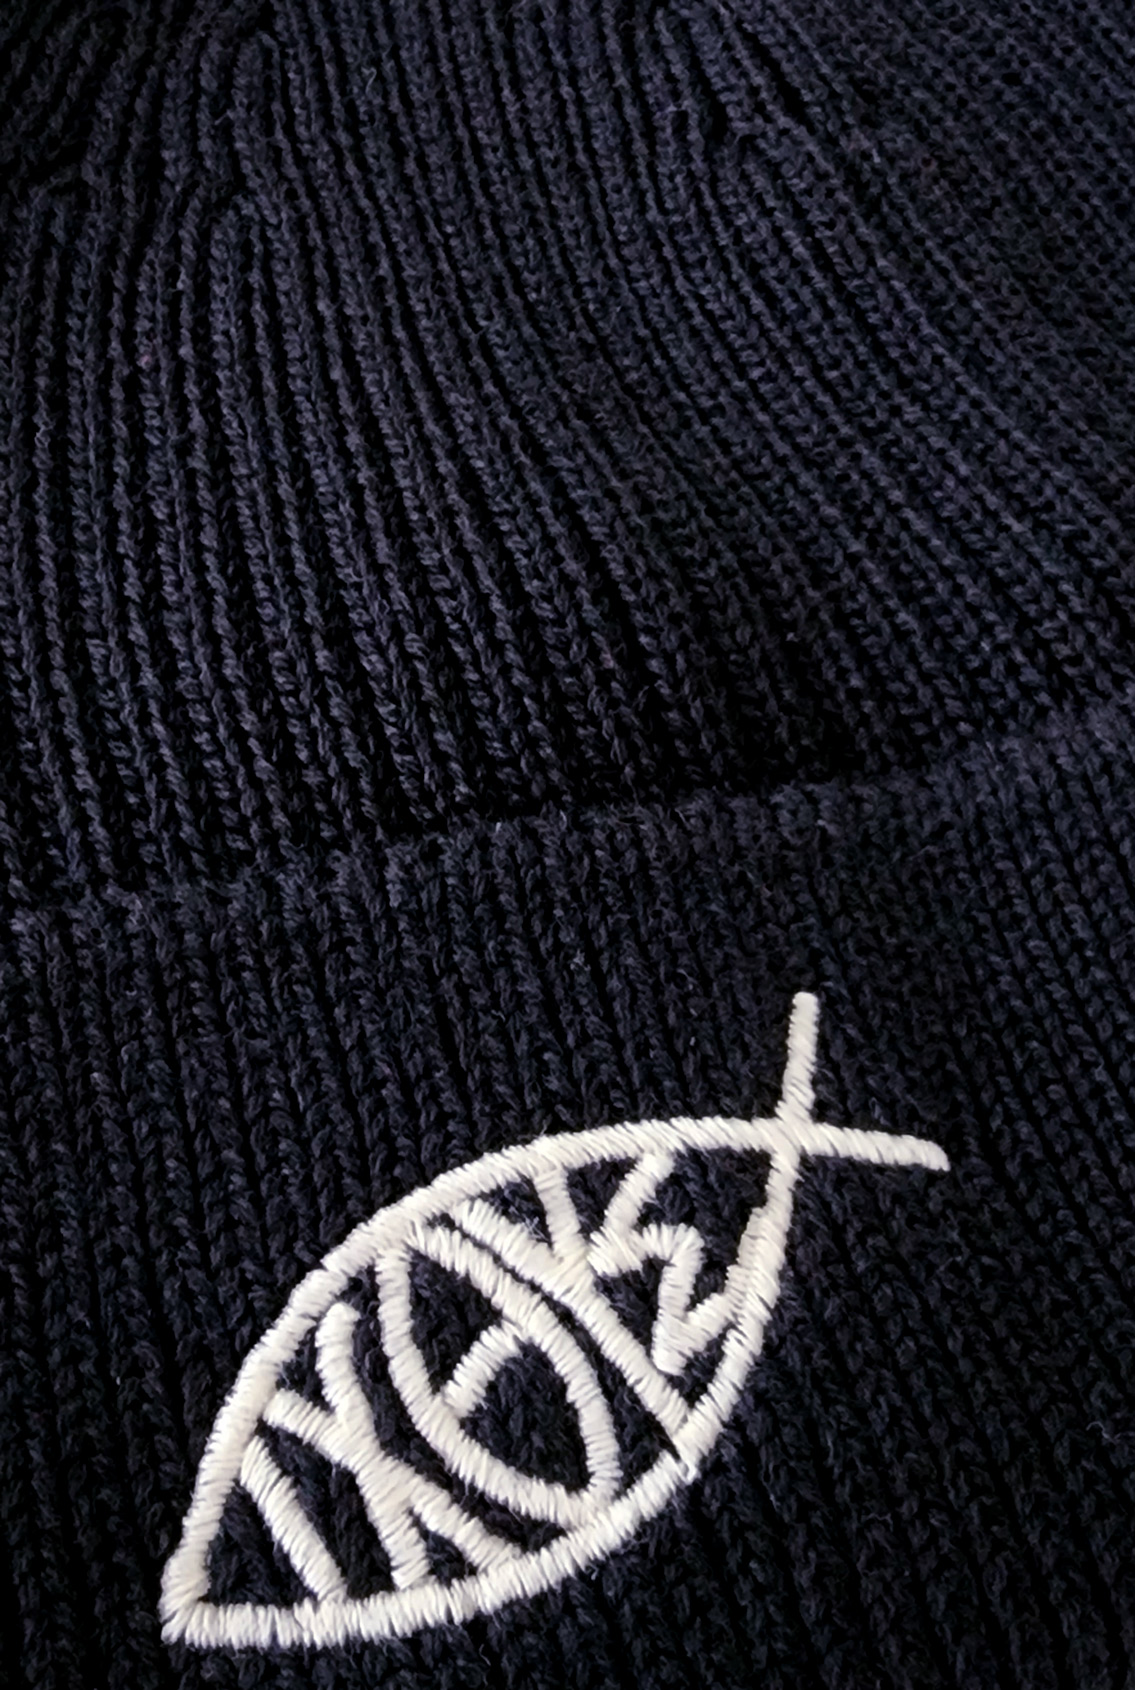 hat with Ιχθύς symbol